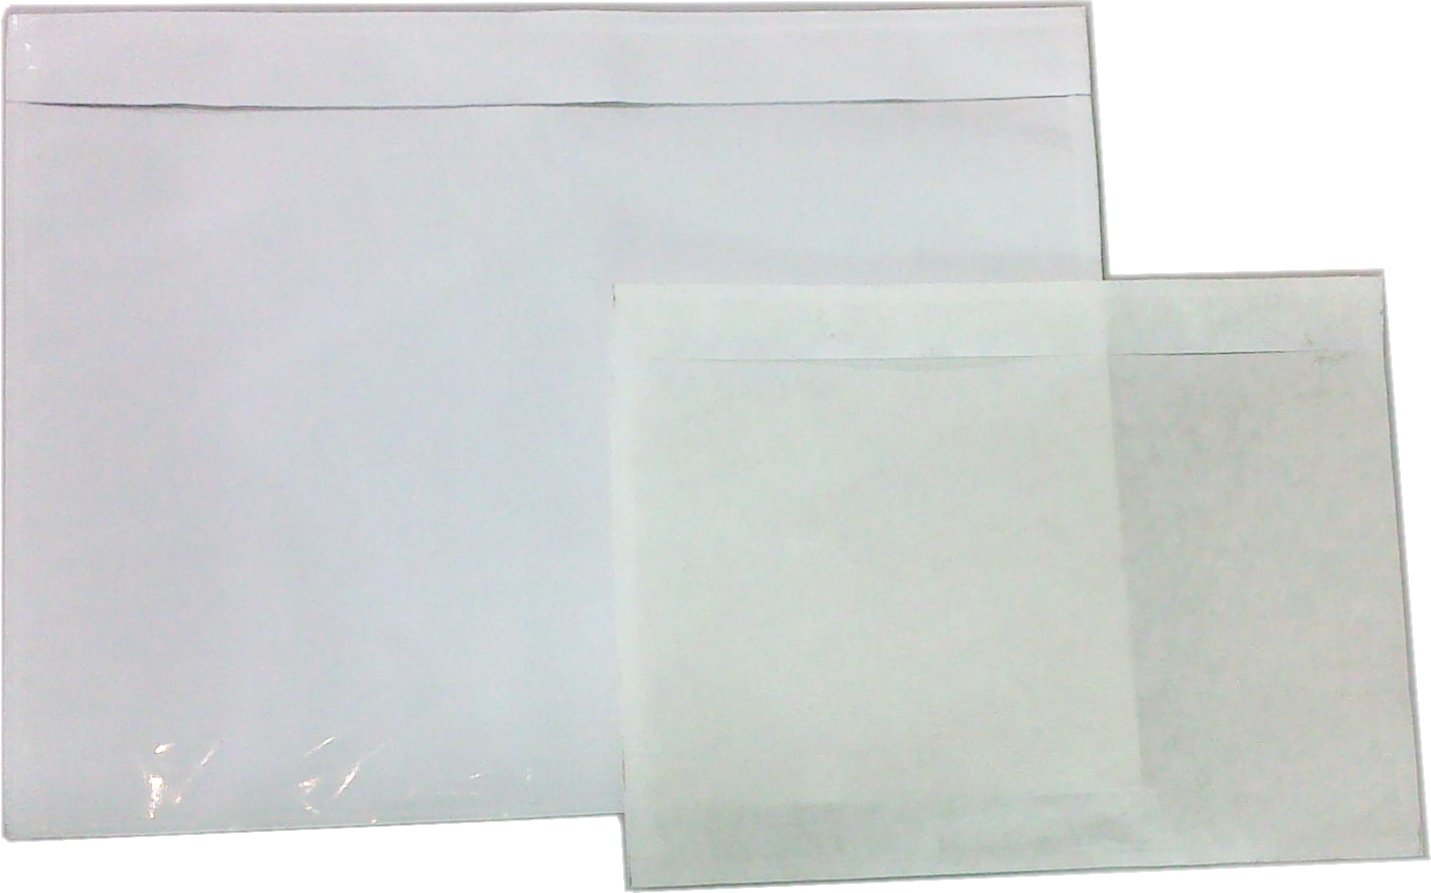 7 x 10 Clear Packing List
Envelopes 1000/Ctn